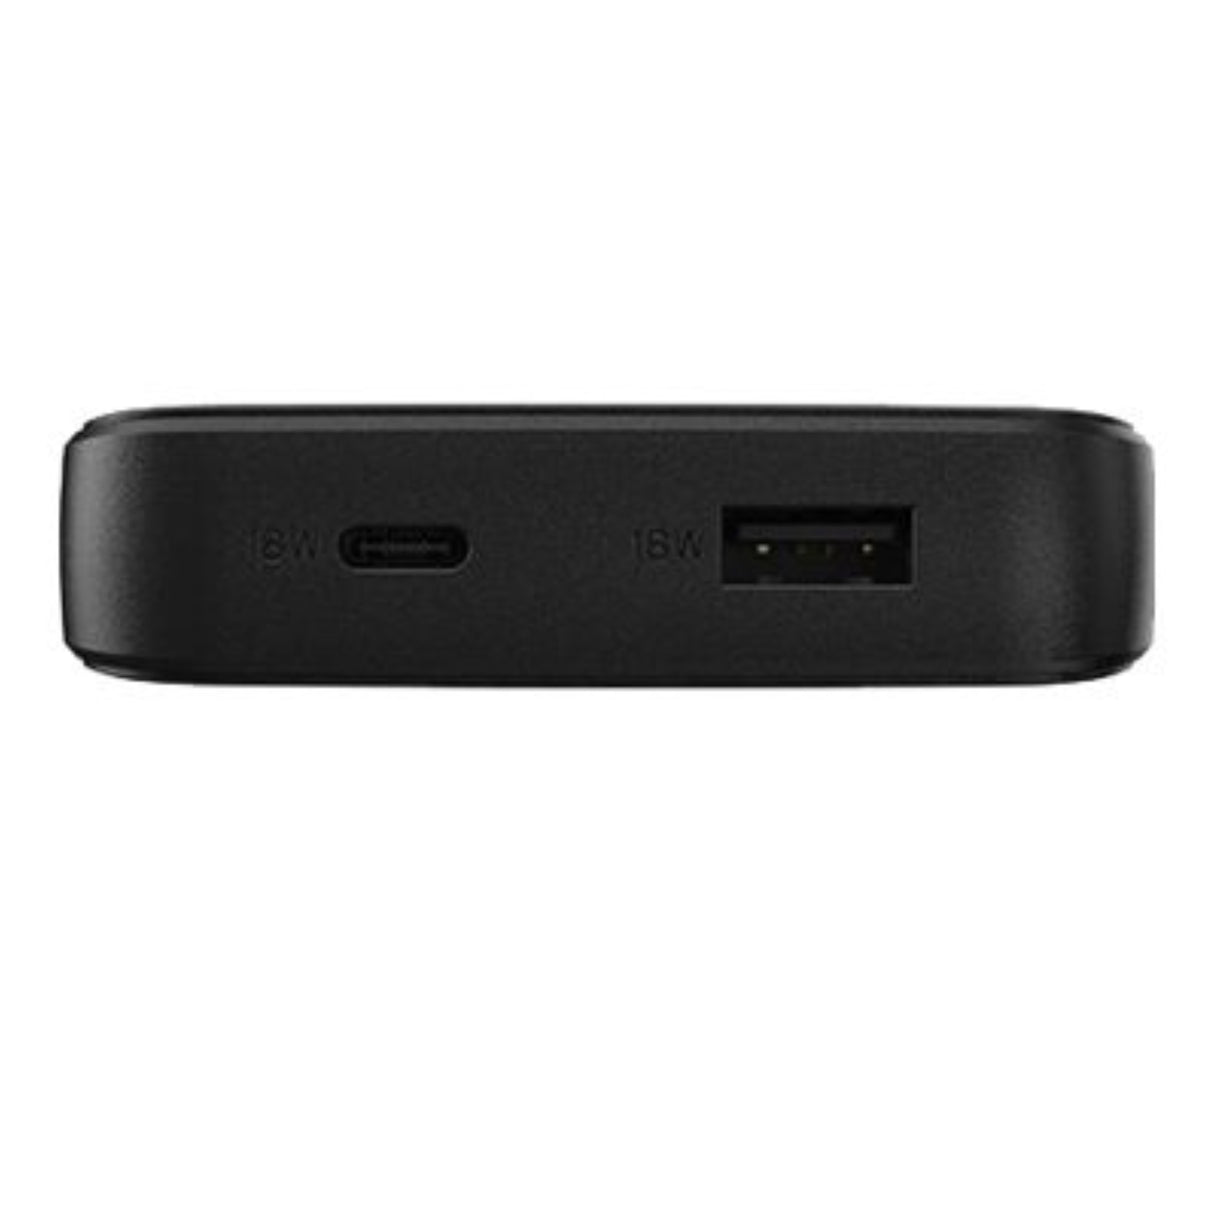 OtterBox Power Bank 10K MAH USB A&C 18W USB-PD + WIRELESS 10W Black - PROTEUS MARINE STORE